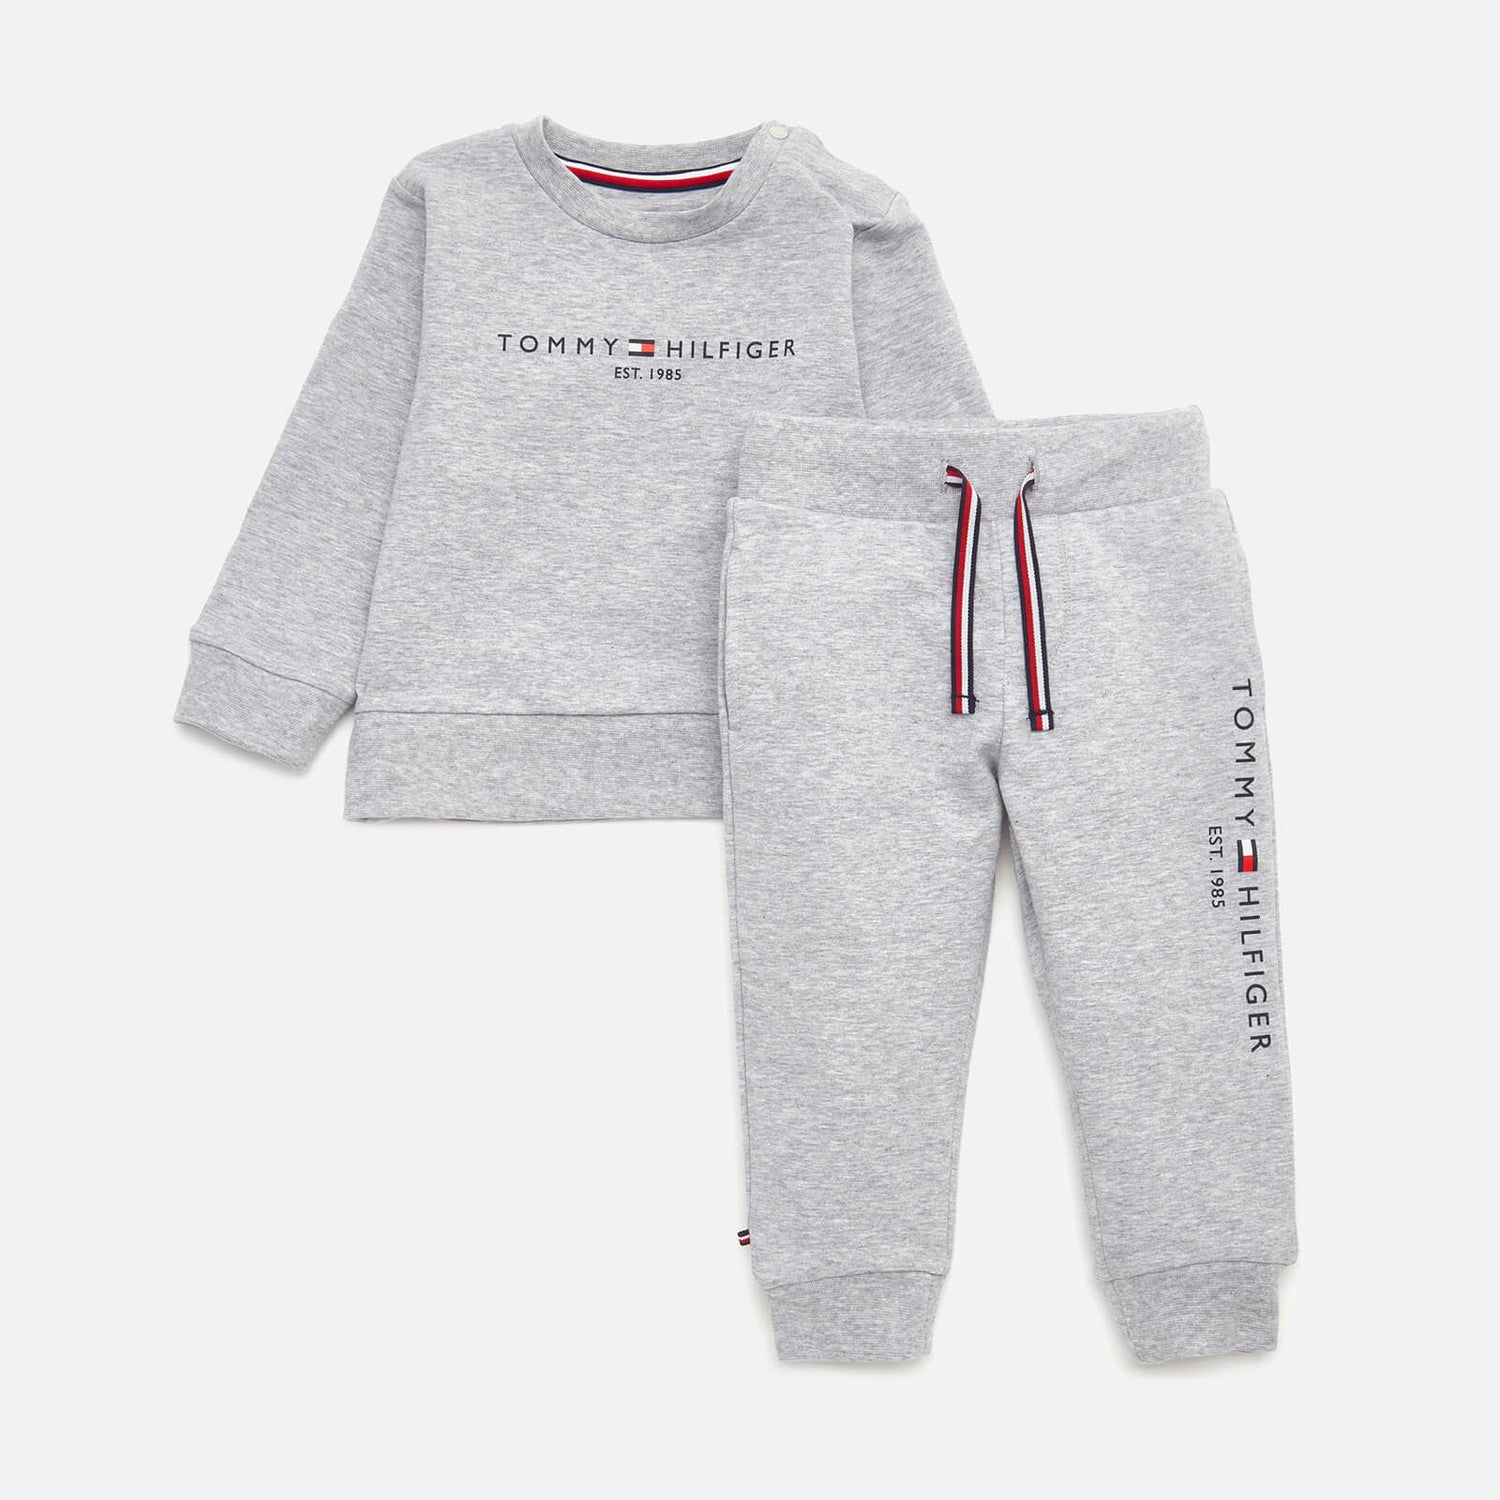 Tommy Hilfiger Babies' Essential Set - Grey